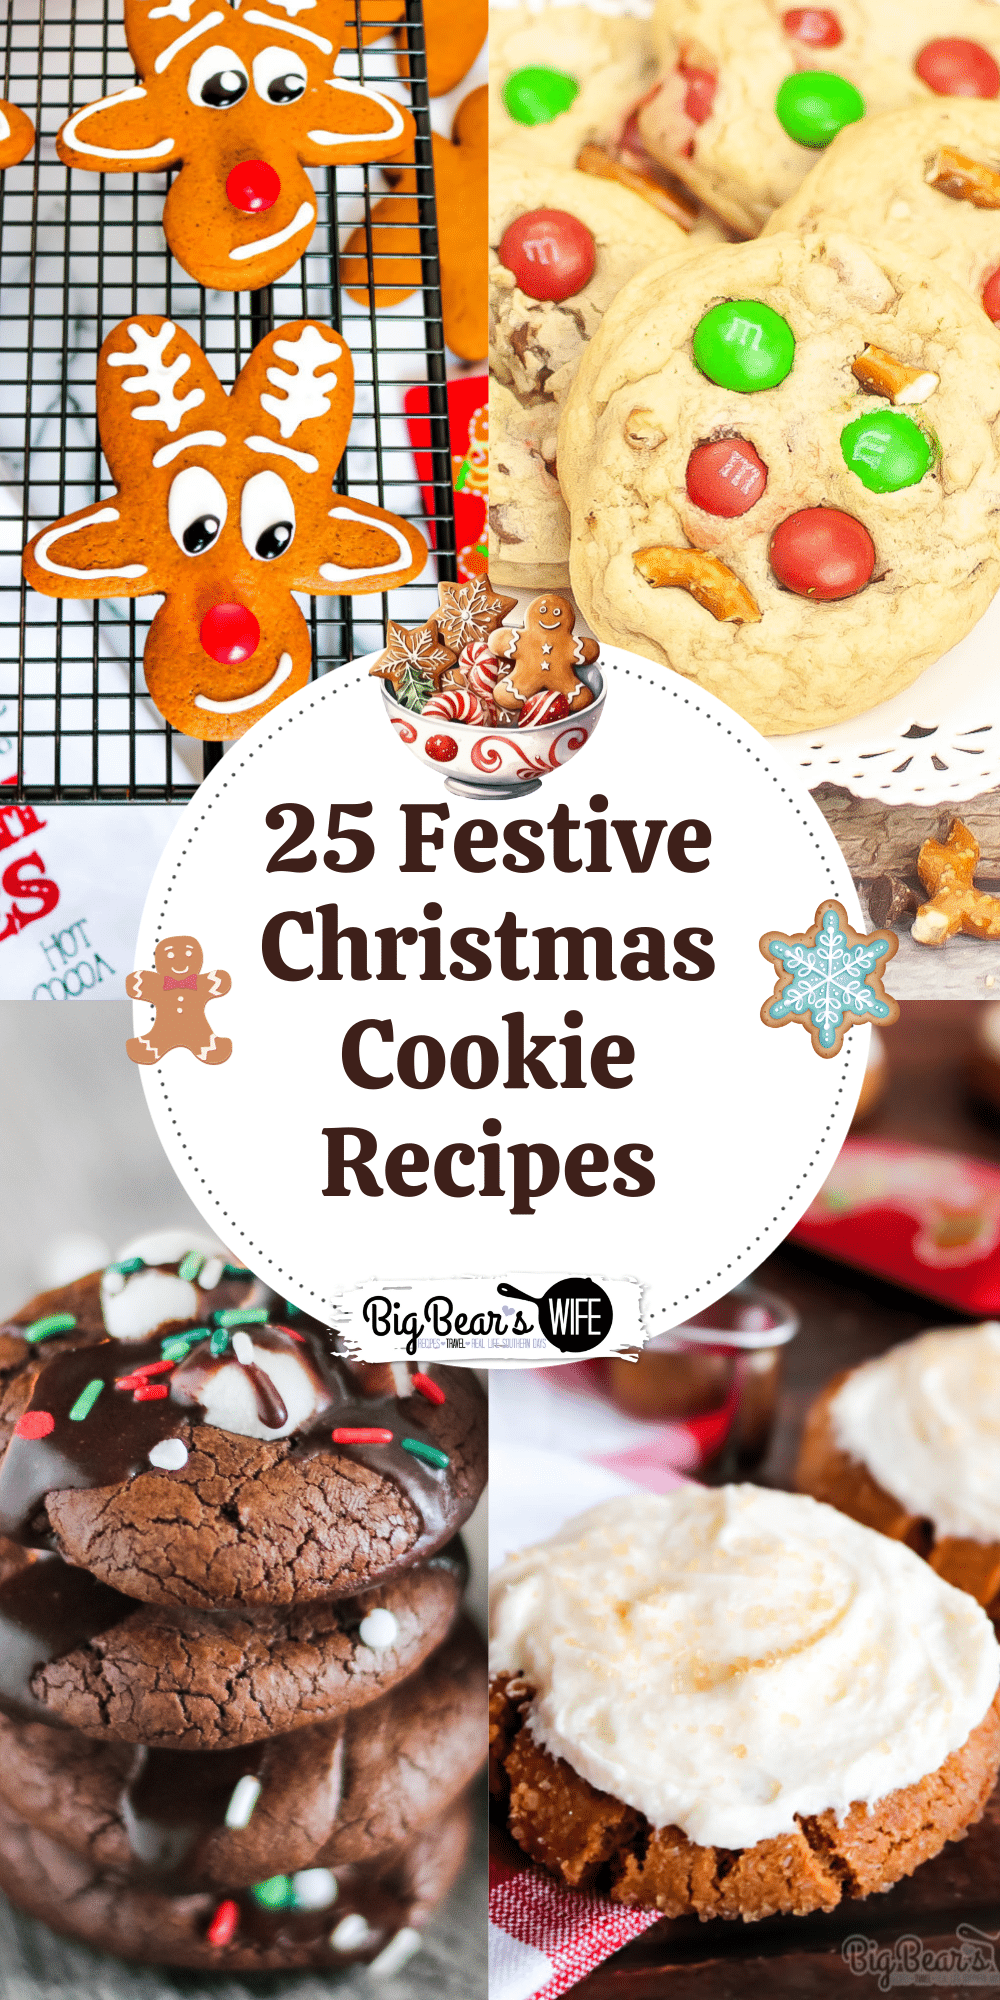 25 Festive Christmas Cookie Recipes - Big Bear's Wife